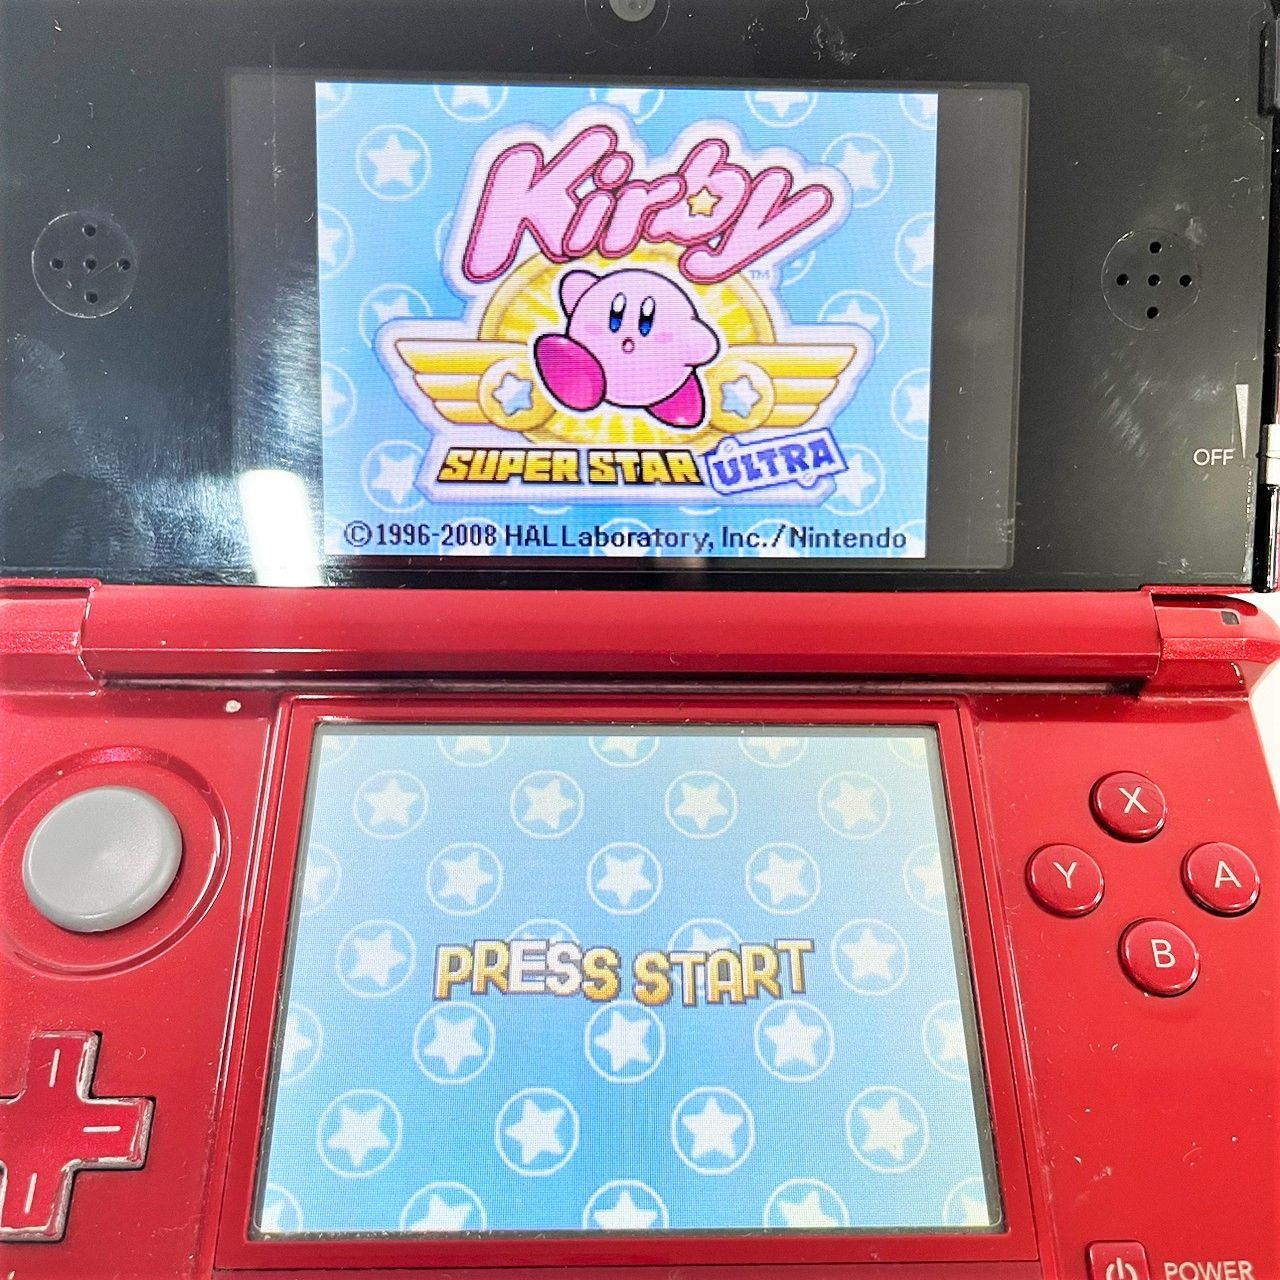 DS☆KIRBY SUPER STAR ULTRA 海外版携帯用ゲームソフト - 携帯用ゲーム 